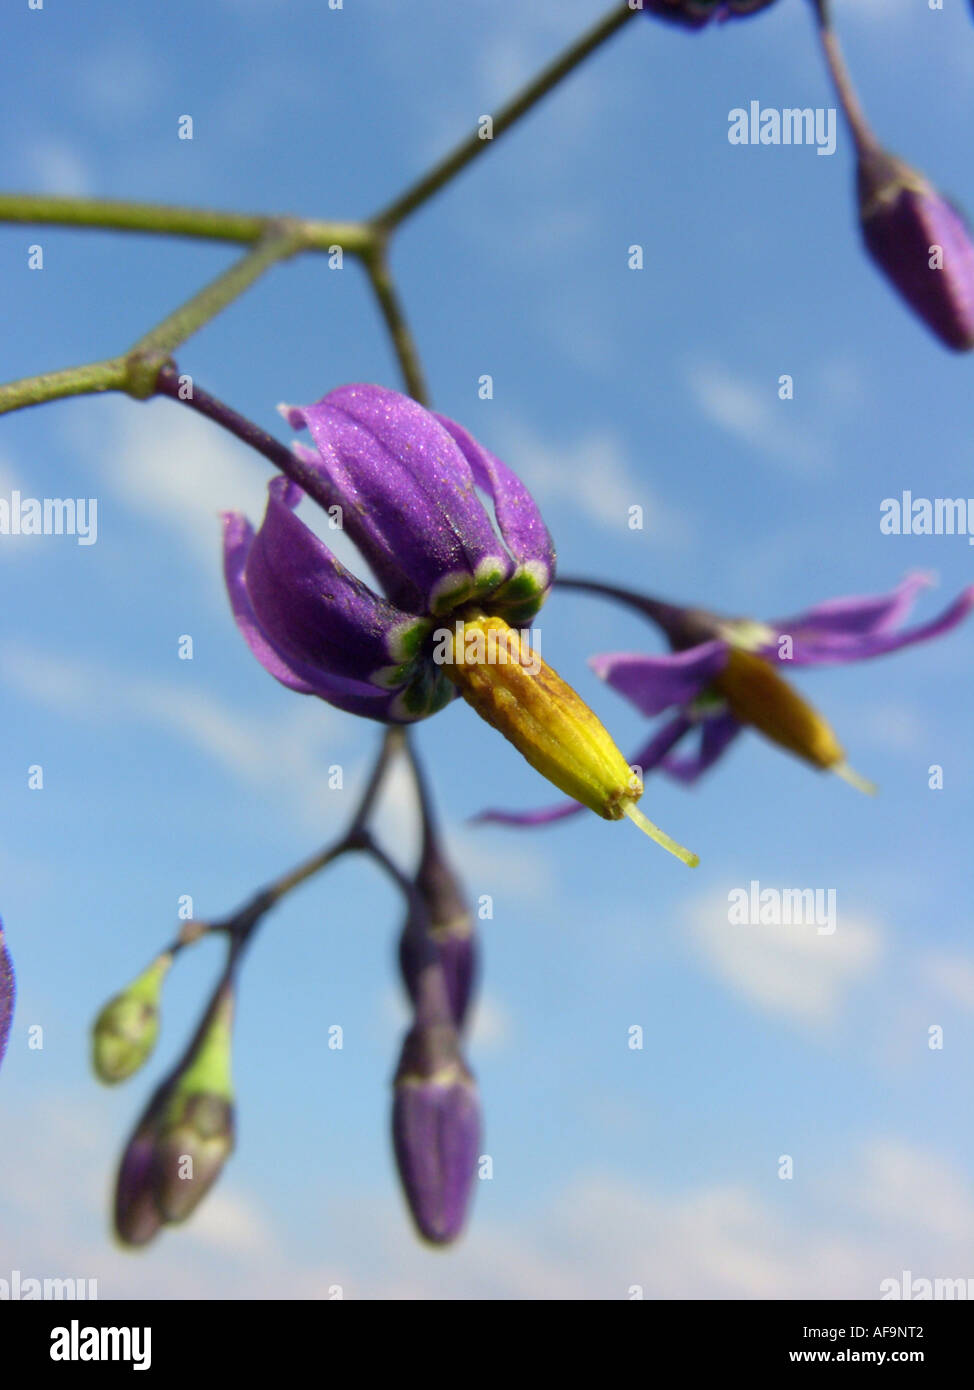 bitter nightshade, bittersweet nightshade, woody nightshade, climbing nightshade (Solanum dulcamara), flower against blue sky Stock Photo